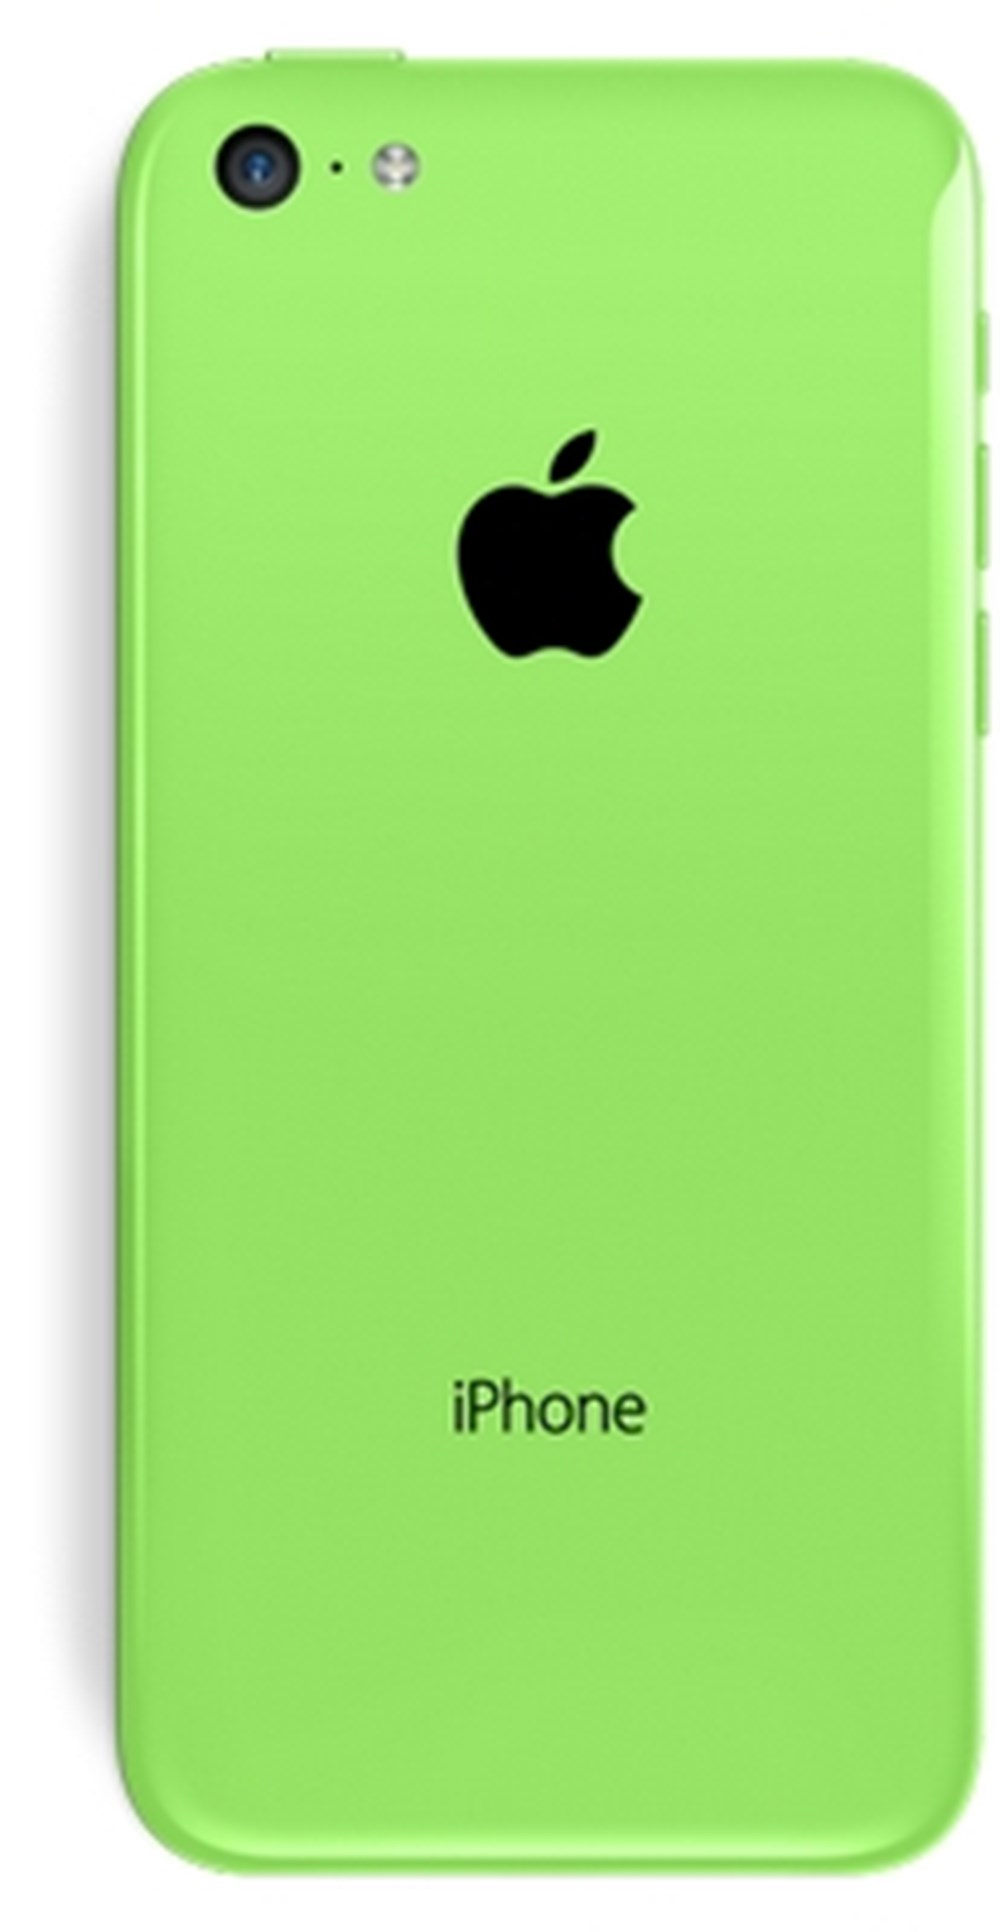 Телефон айфон зеленый. Айфон 5ц. Apple iphone 5c. Айфон 5 си. Смартфон Apple iphone 5c 8gb.